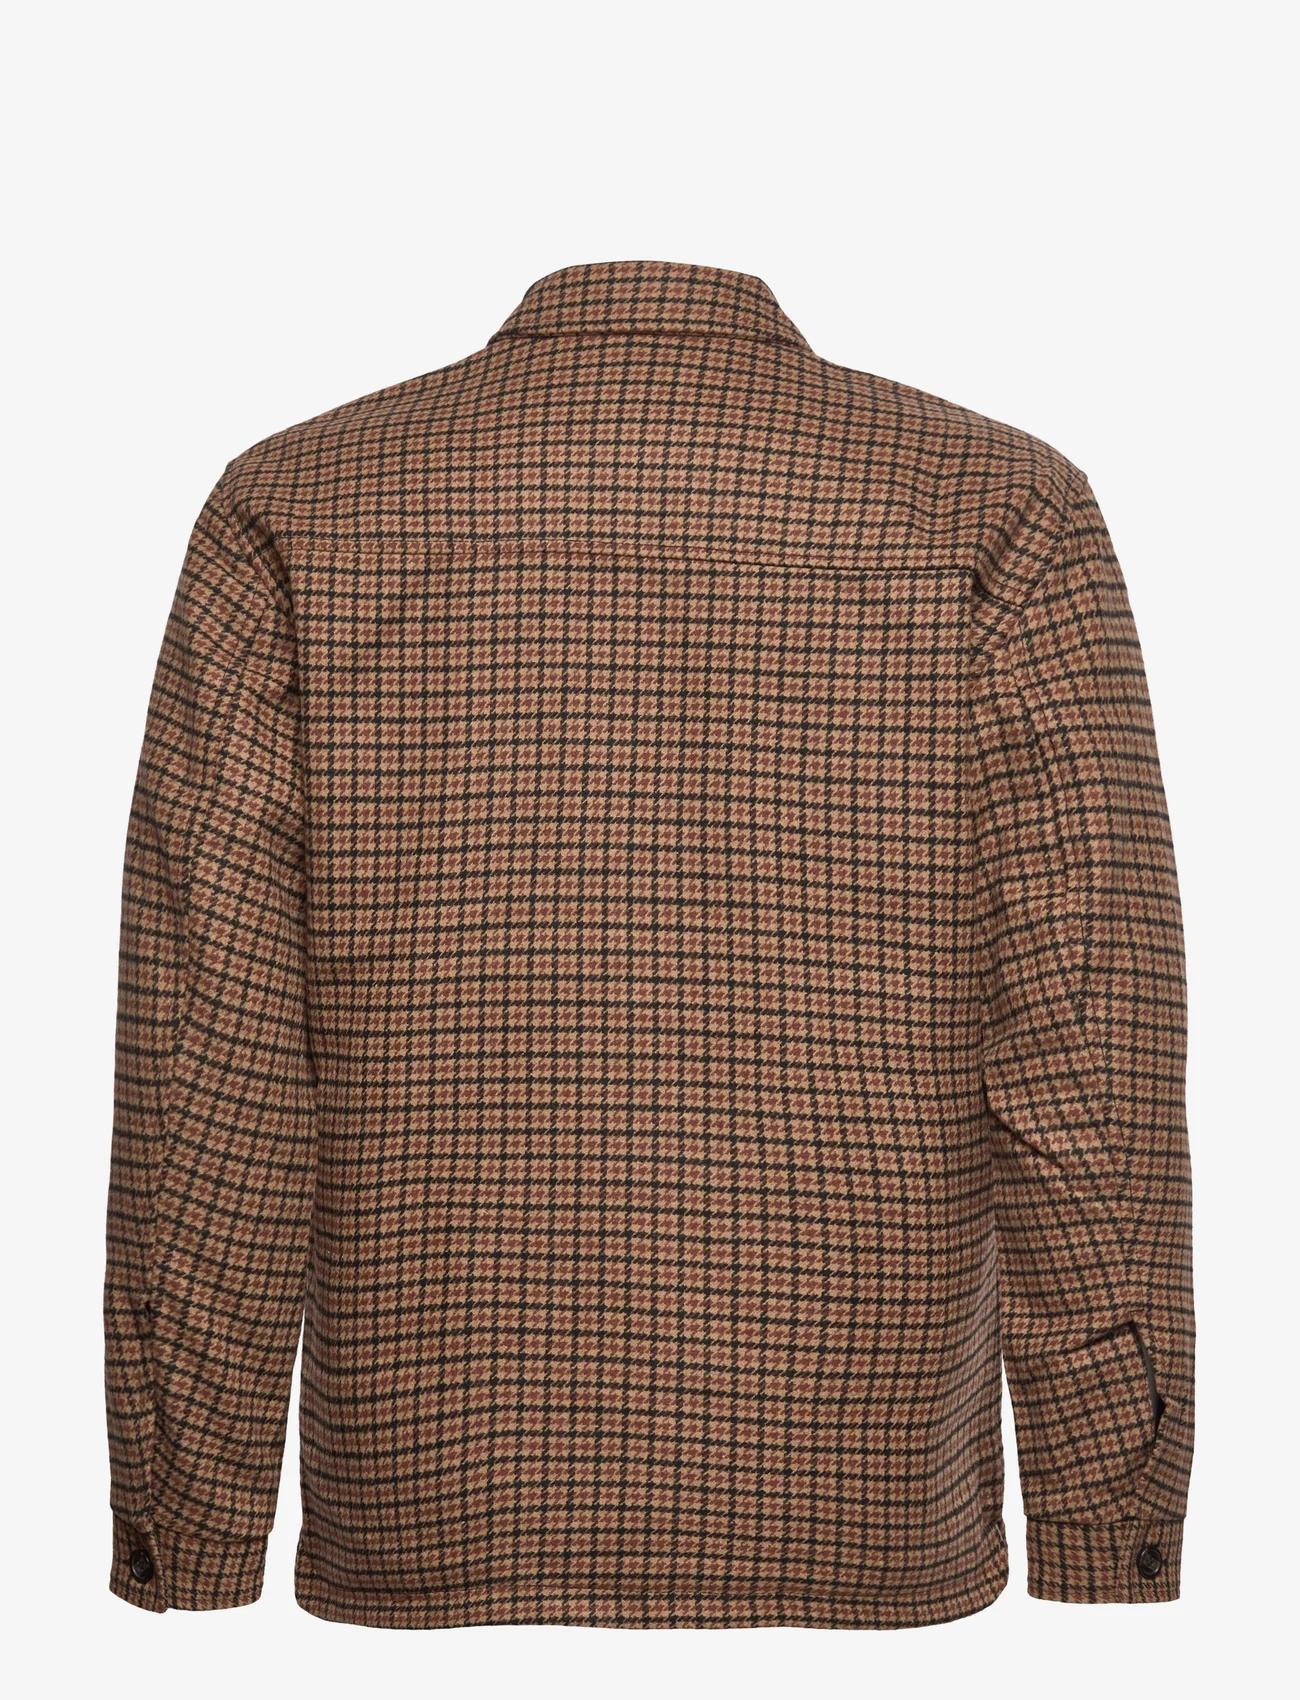 Redefined Rebel - RRHeath Shirt - karierte hemden - brown check - 1